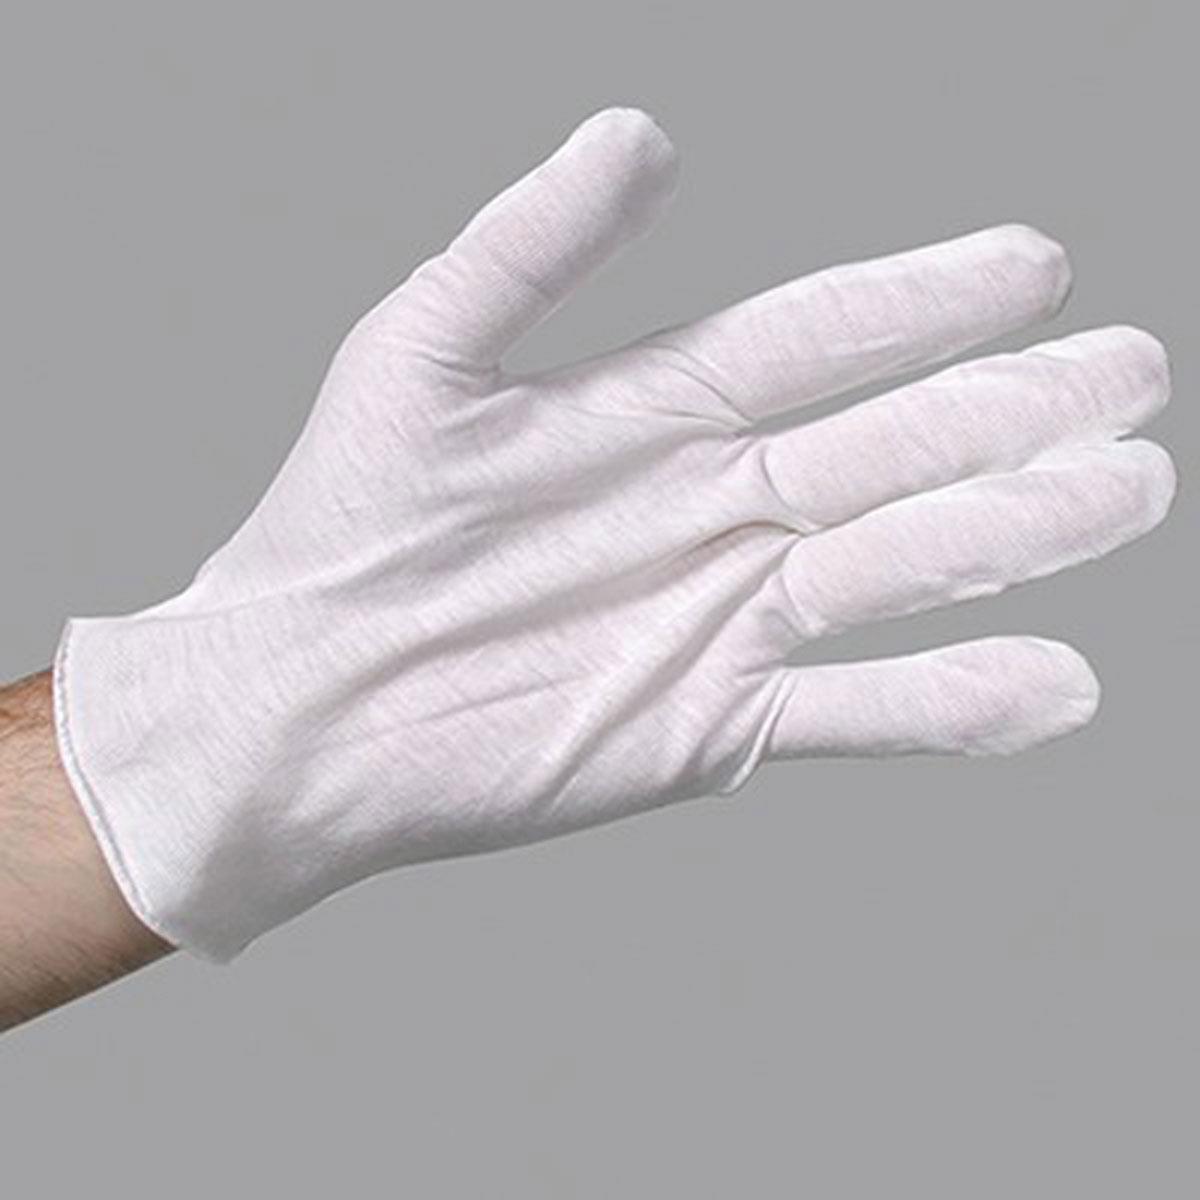 Image of Sirchie Men's Cotton Gloves